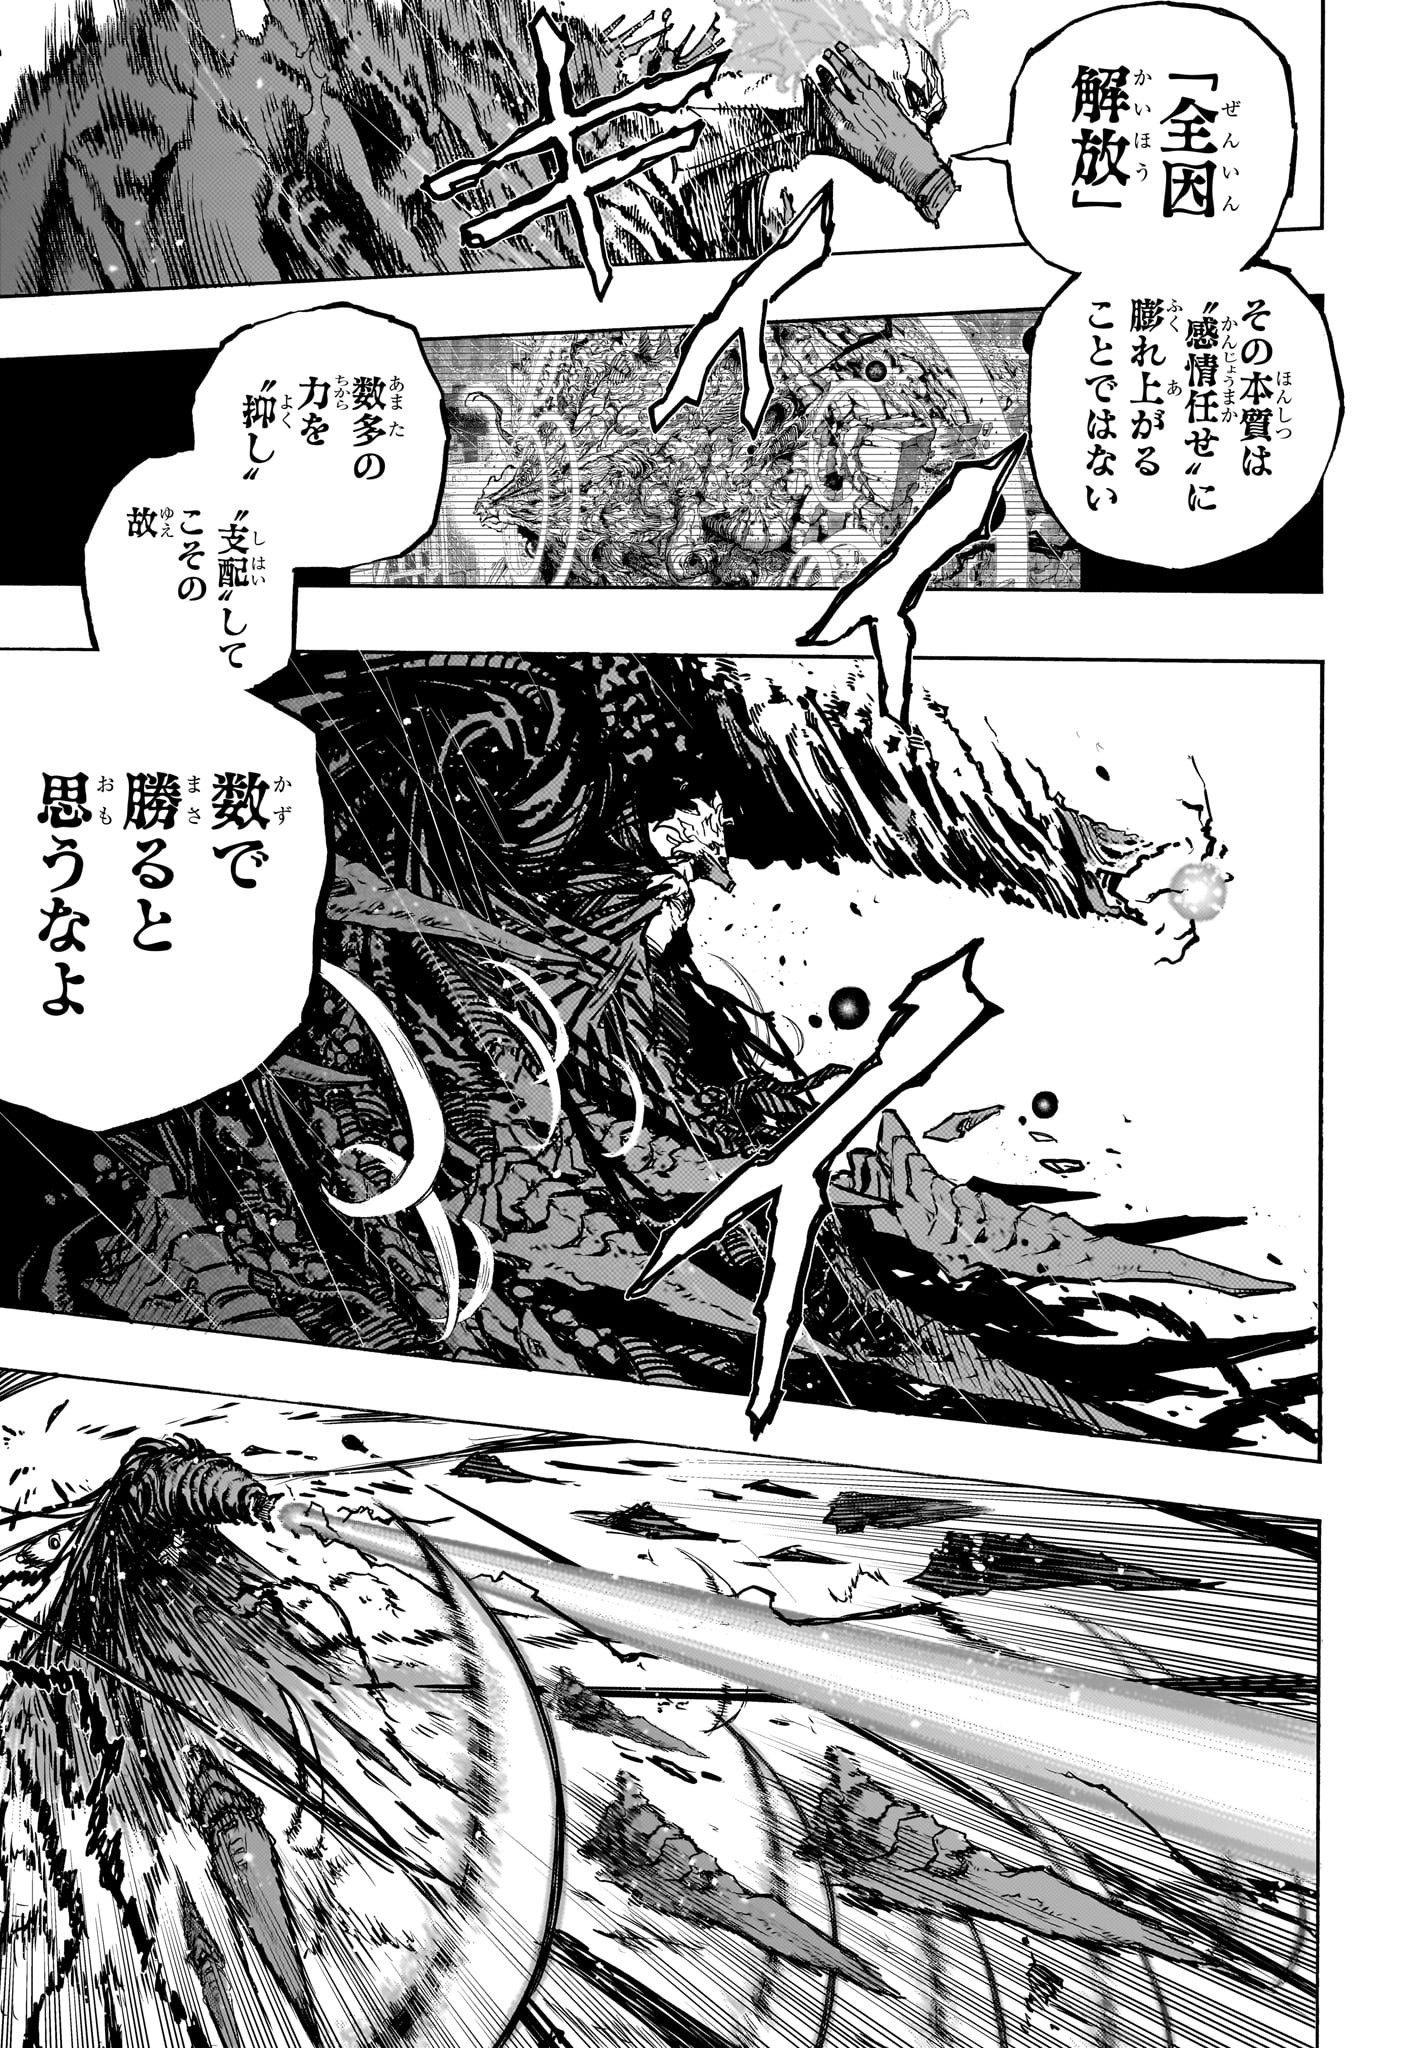 Boku no Hero Academia - Chapter 422 - Page 3